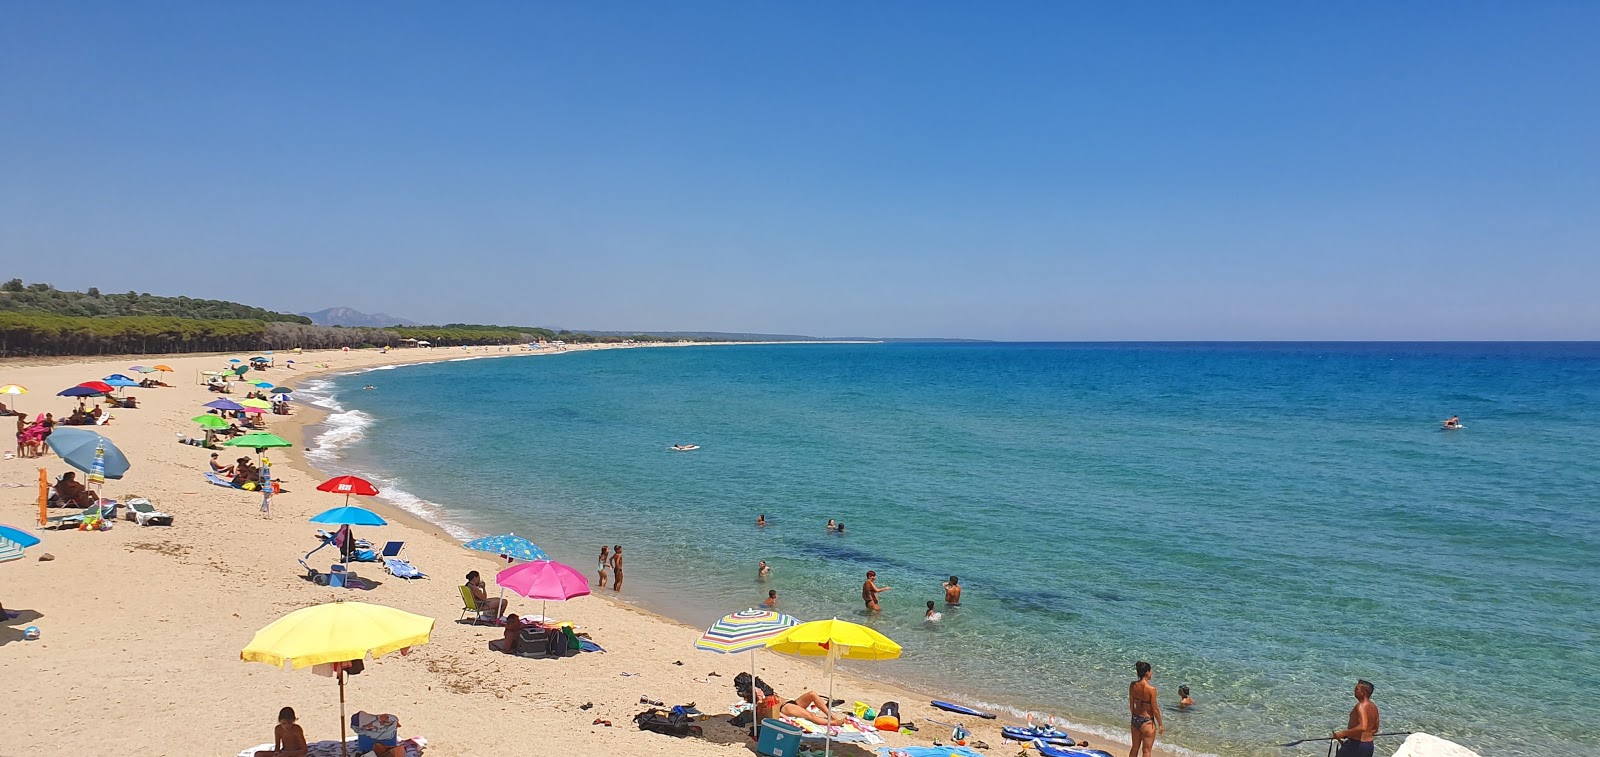 Fotografie cu Spiaggia Su Barone cu nivelul de curățenie in medie